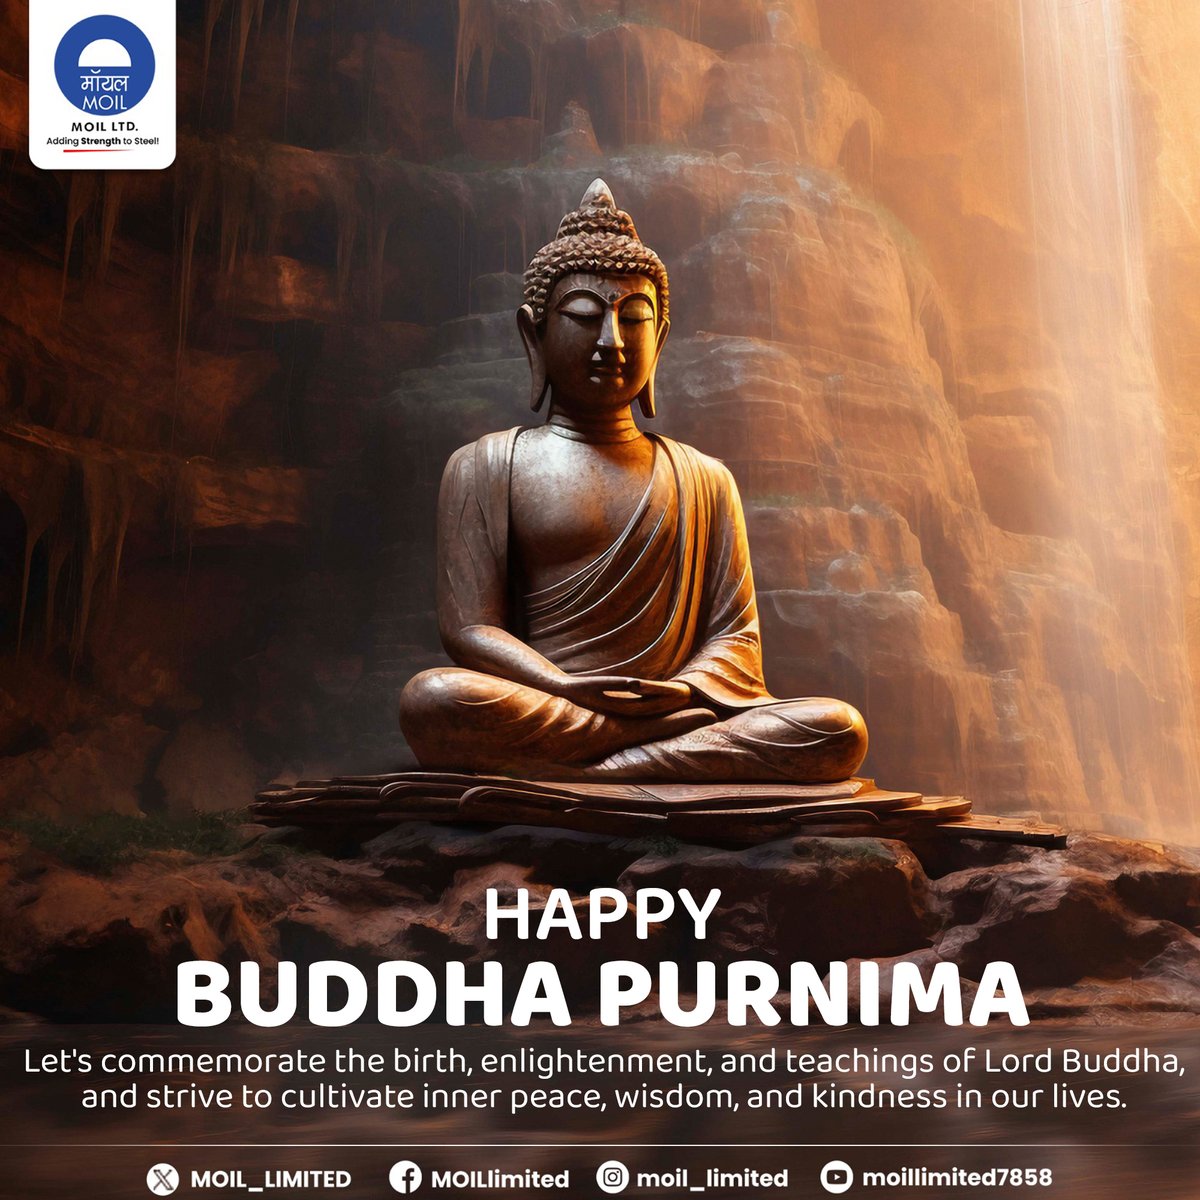 Honoring the timeless teachings of peace and enlightenment on this sacred day. May Lord Buddha’s wisdom continue to inspire us all. #BuddhaPurnima #SpiritualAwakening #MOIL #HarEkKaamDeshKeNaam